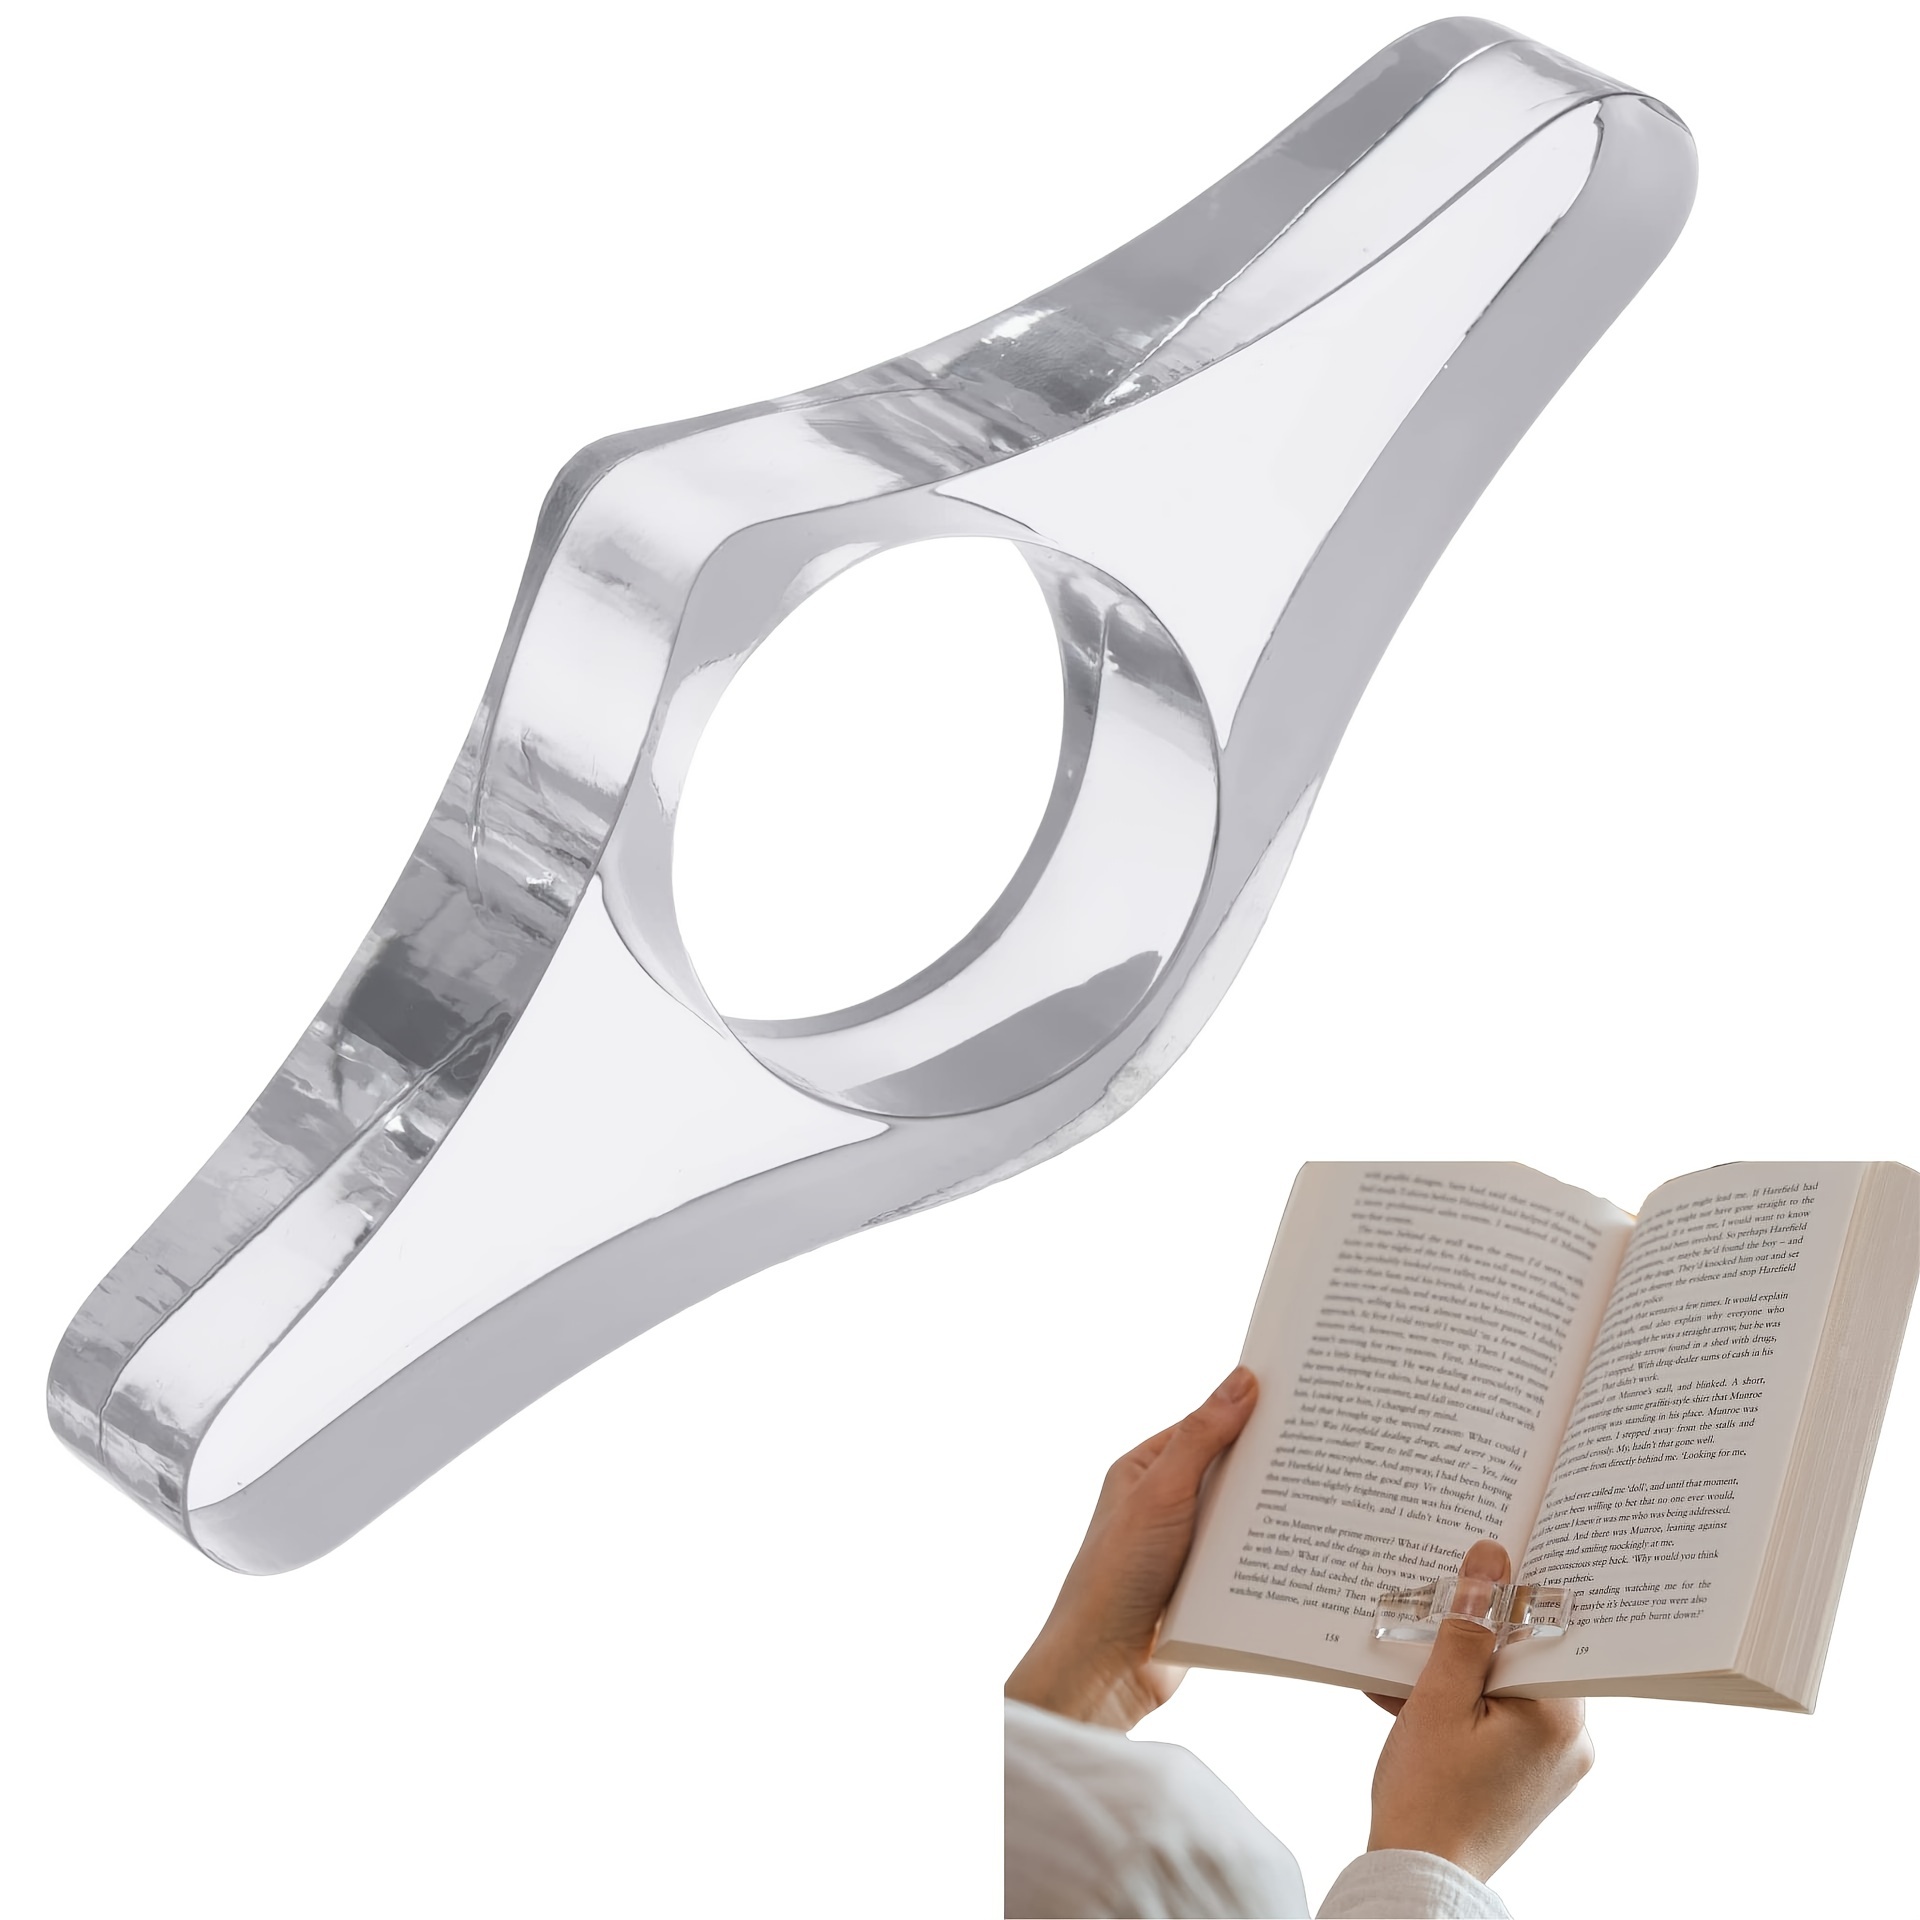 Thumb Thing, accesorio para la lectura